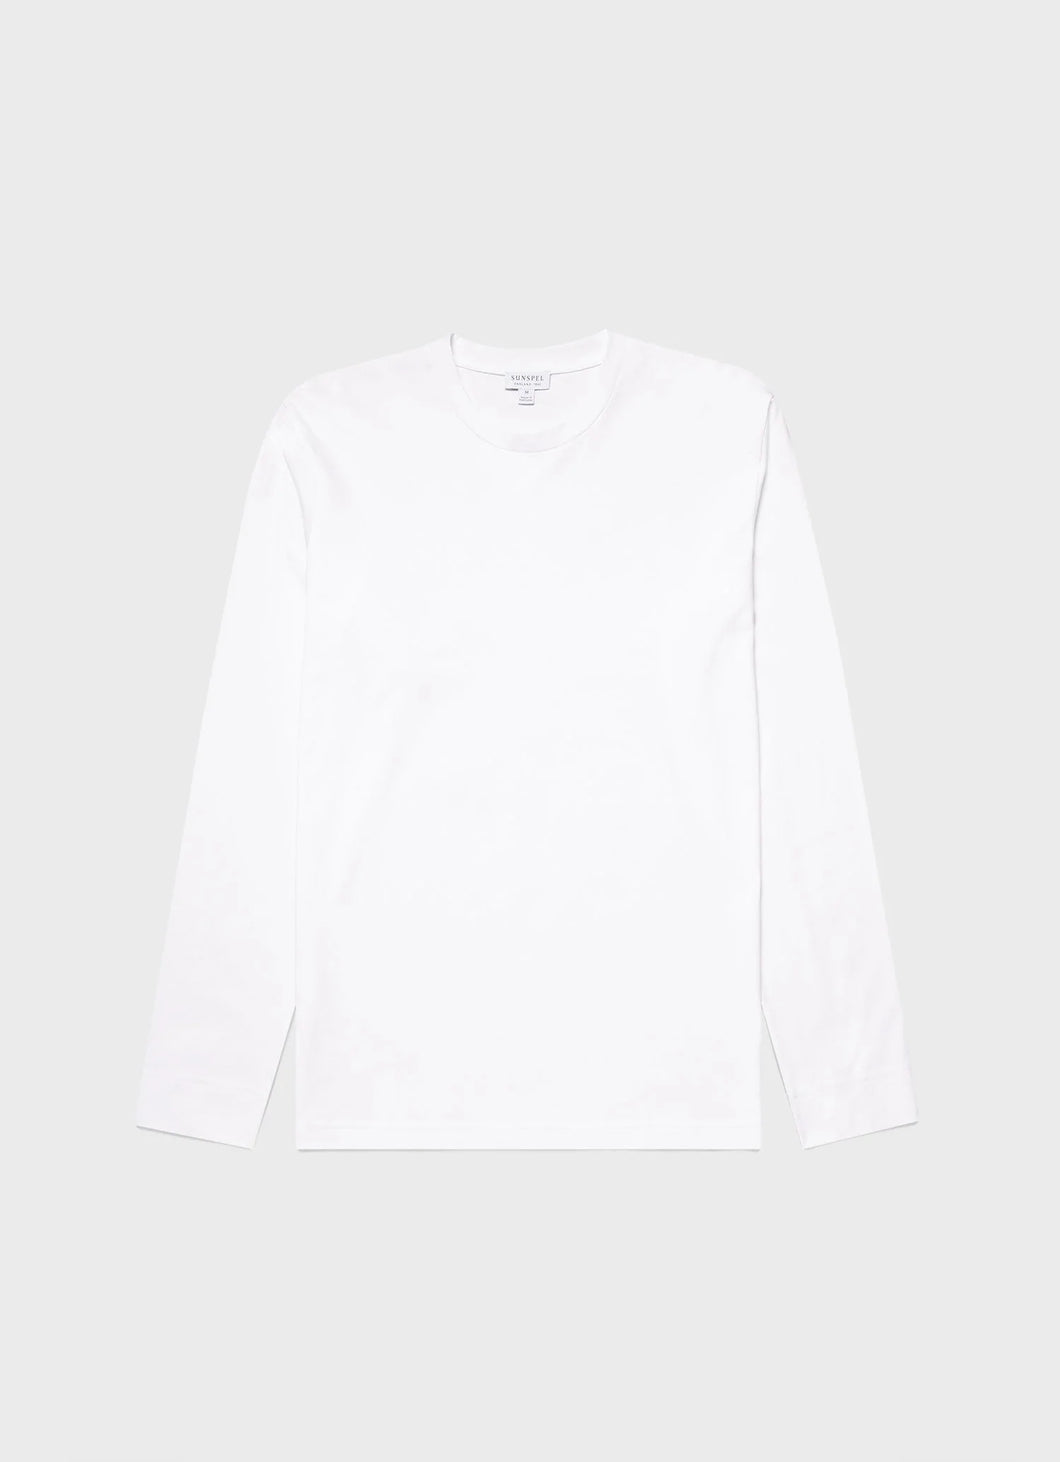 Sunspel - Riviera LS Crew Neck Supima Cotton T-shirt in White.